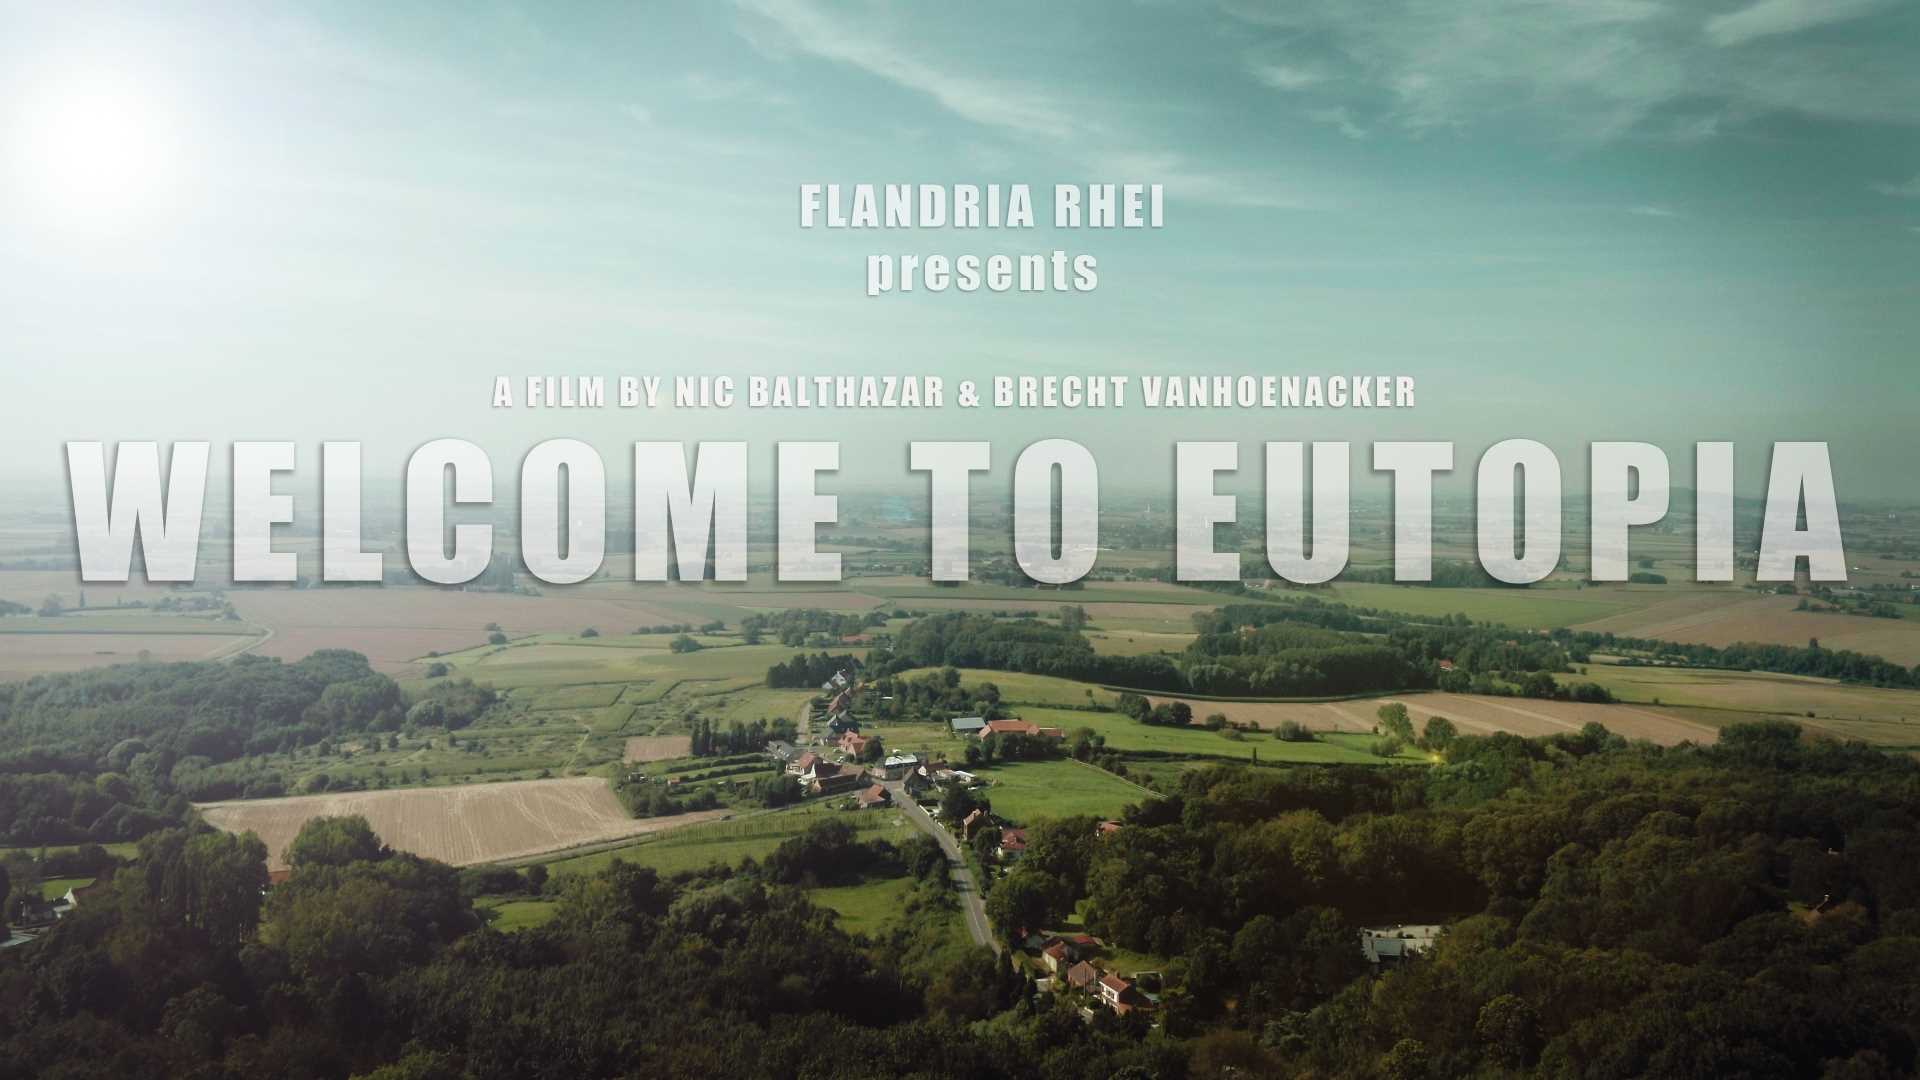 Flandria Rhei : évenement de clôture & première "Welcome to EUtopia"